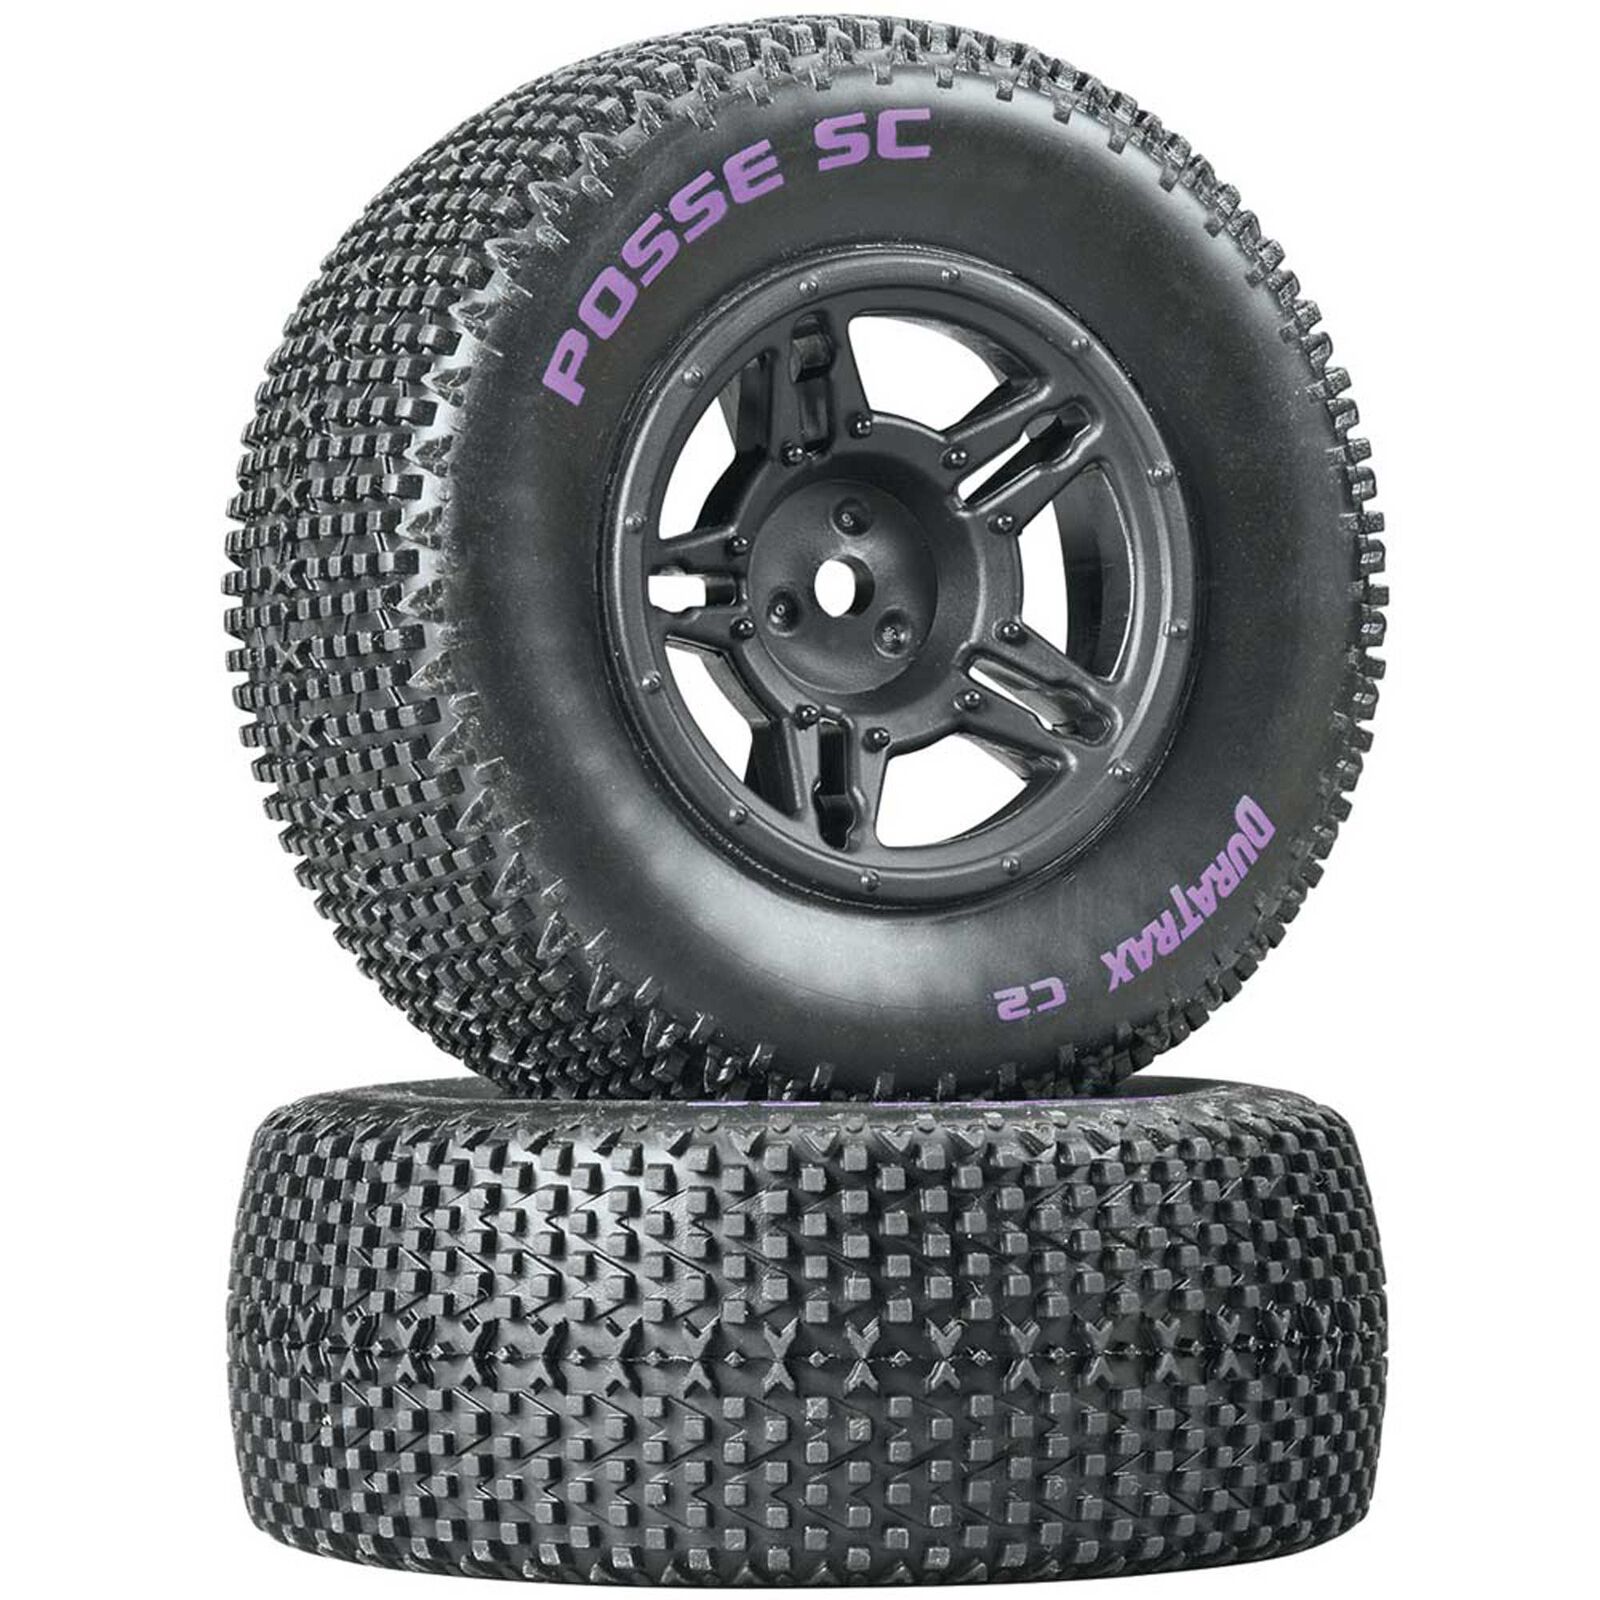 Posse SC C2 Mounted Tires, Rear Slash (2)